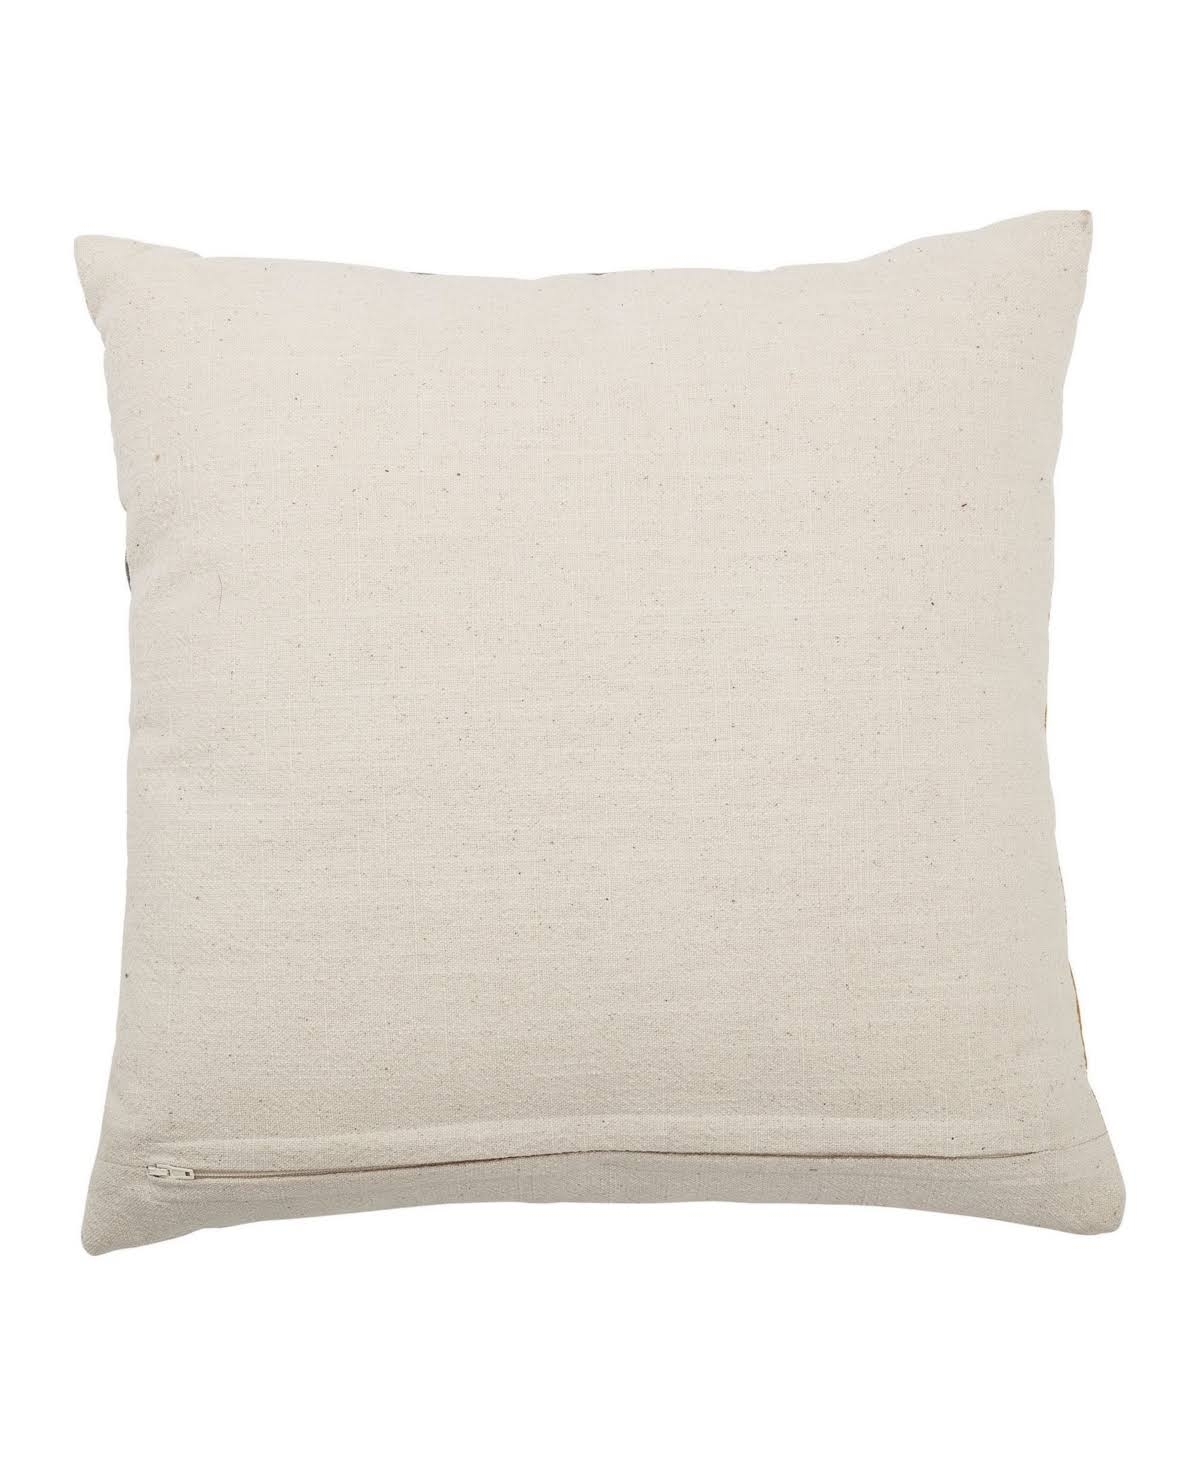 Geometric Printed Cotton Pillow, Mustard & Blue, 16" x 16" - Image 1